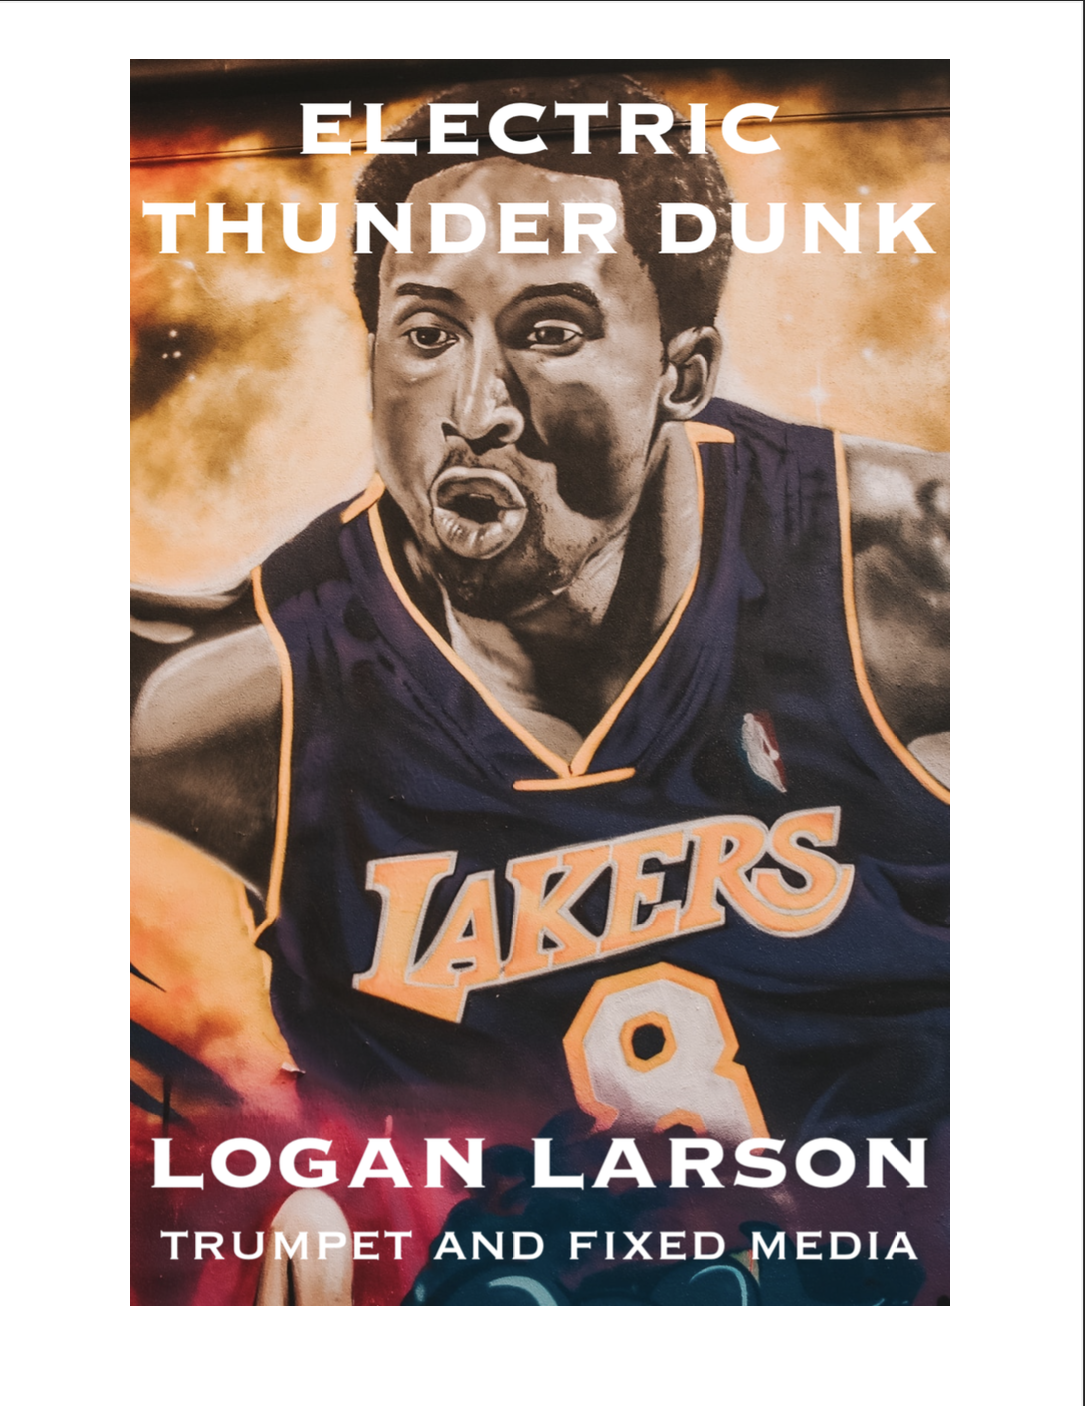 Electric Thunder Dunk by Logan Larson